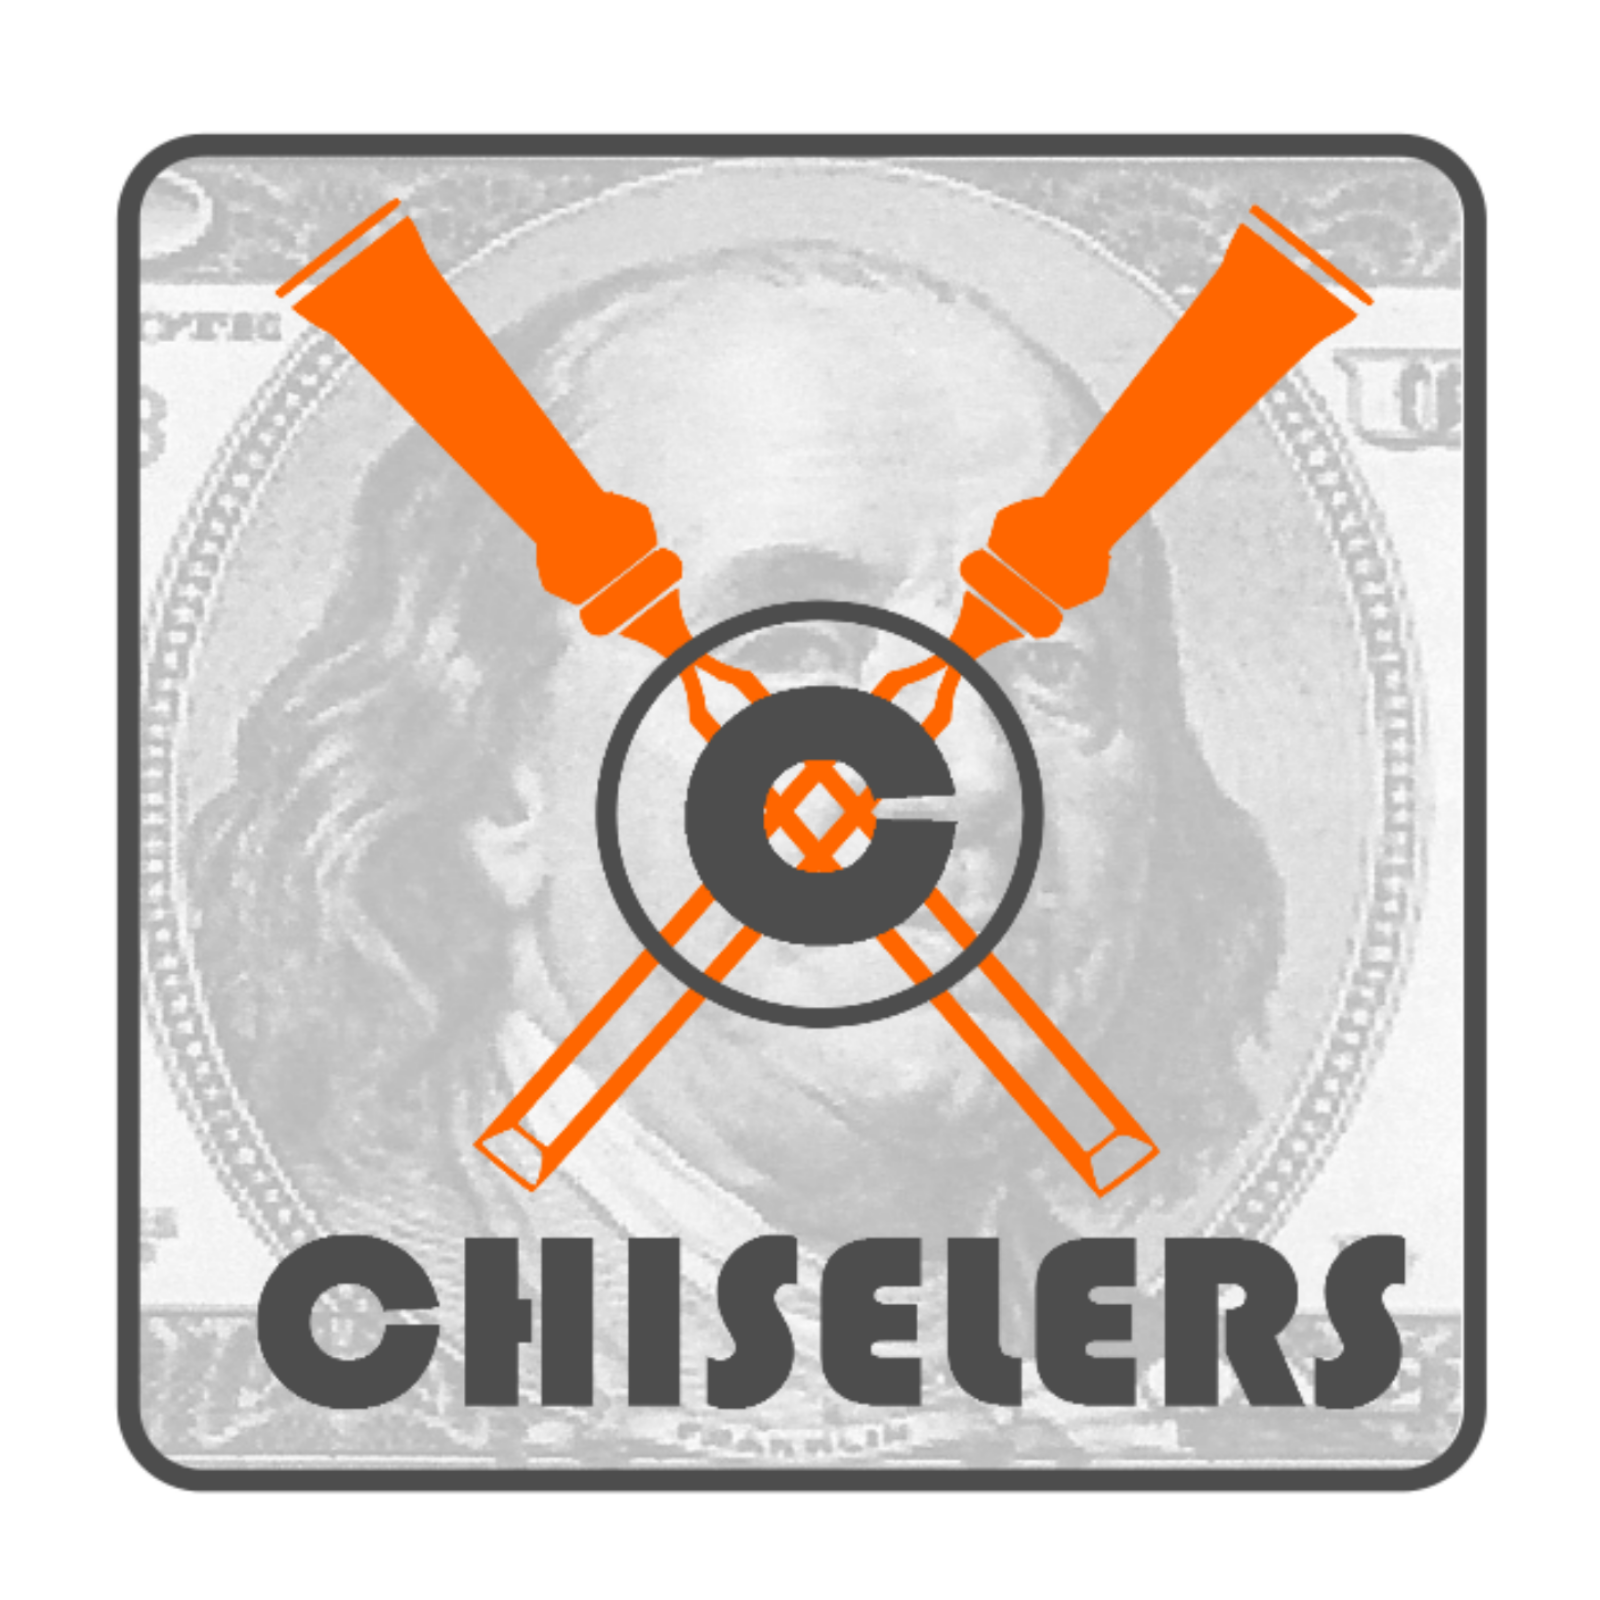 The Chiselers Logo